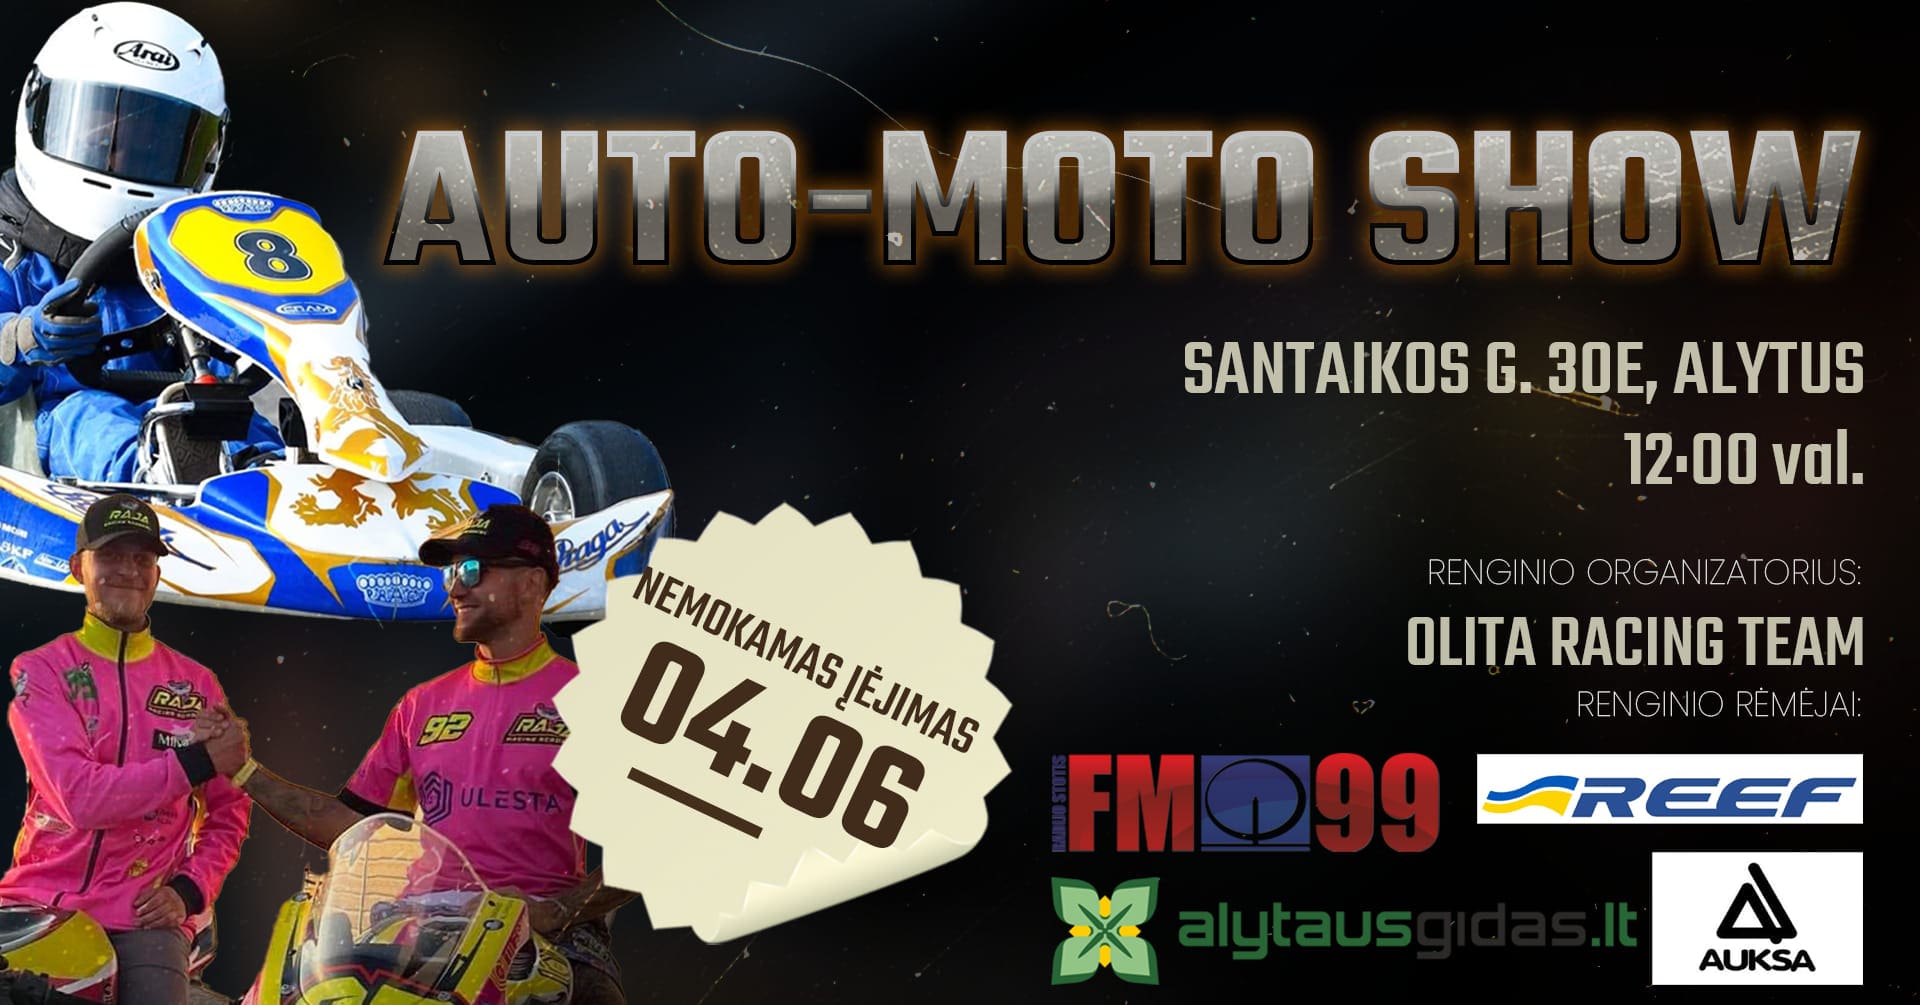 Auto-Moto Show